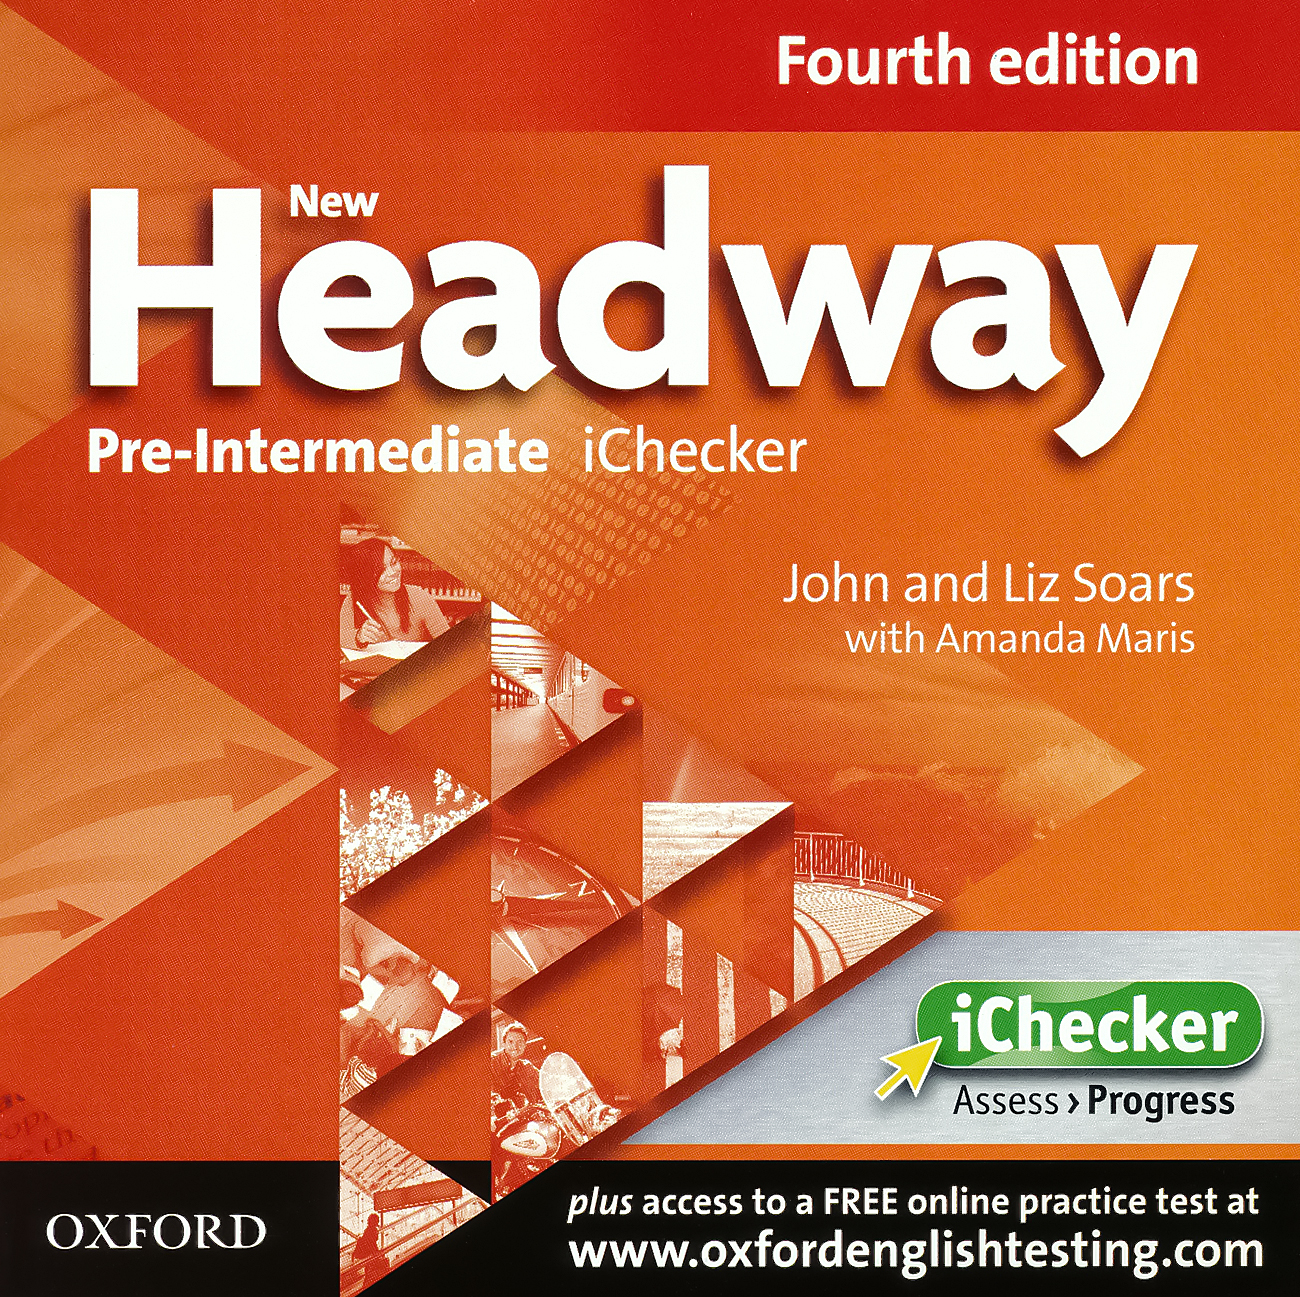 Headway pre intermediate new edition. Headway pre-Intermediate 4th Edition. Headway Upper Intermediate 4th Edition. New Headway pre-Intermediate 4th Edition. Headway b2.